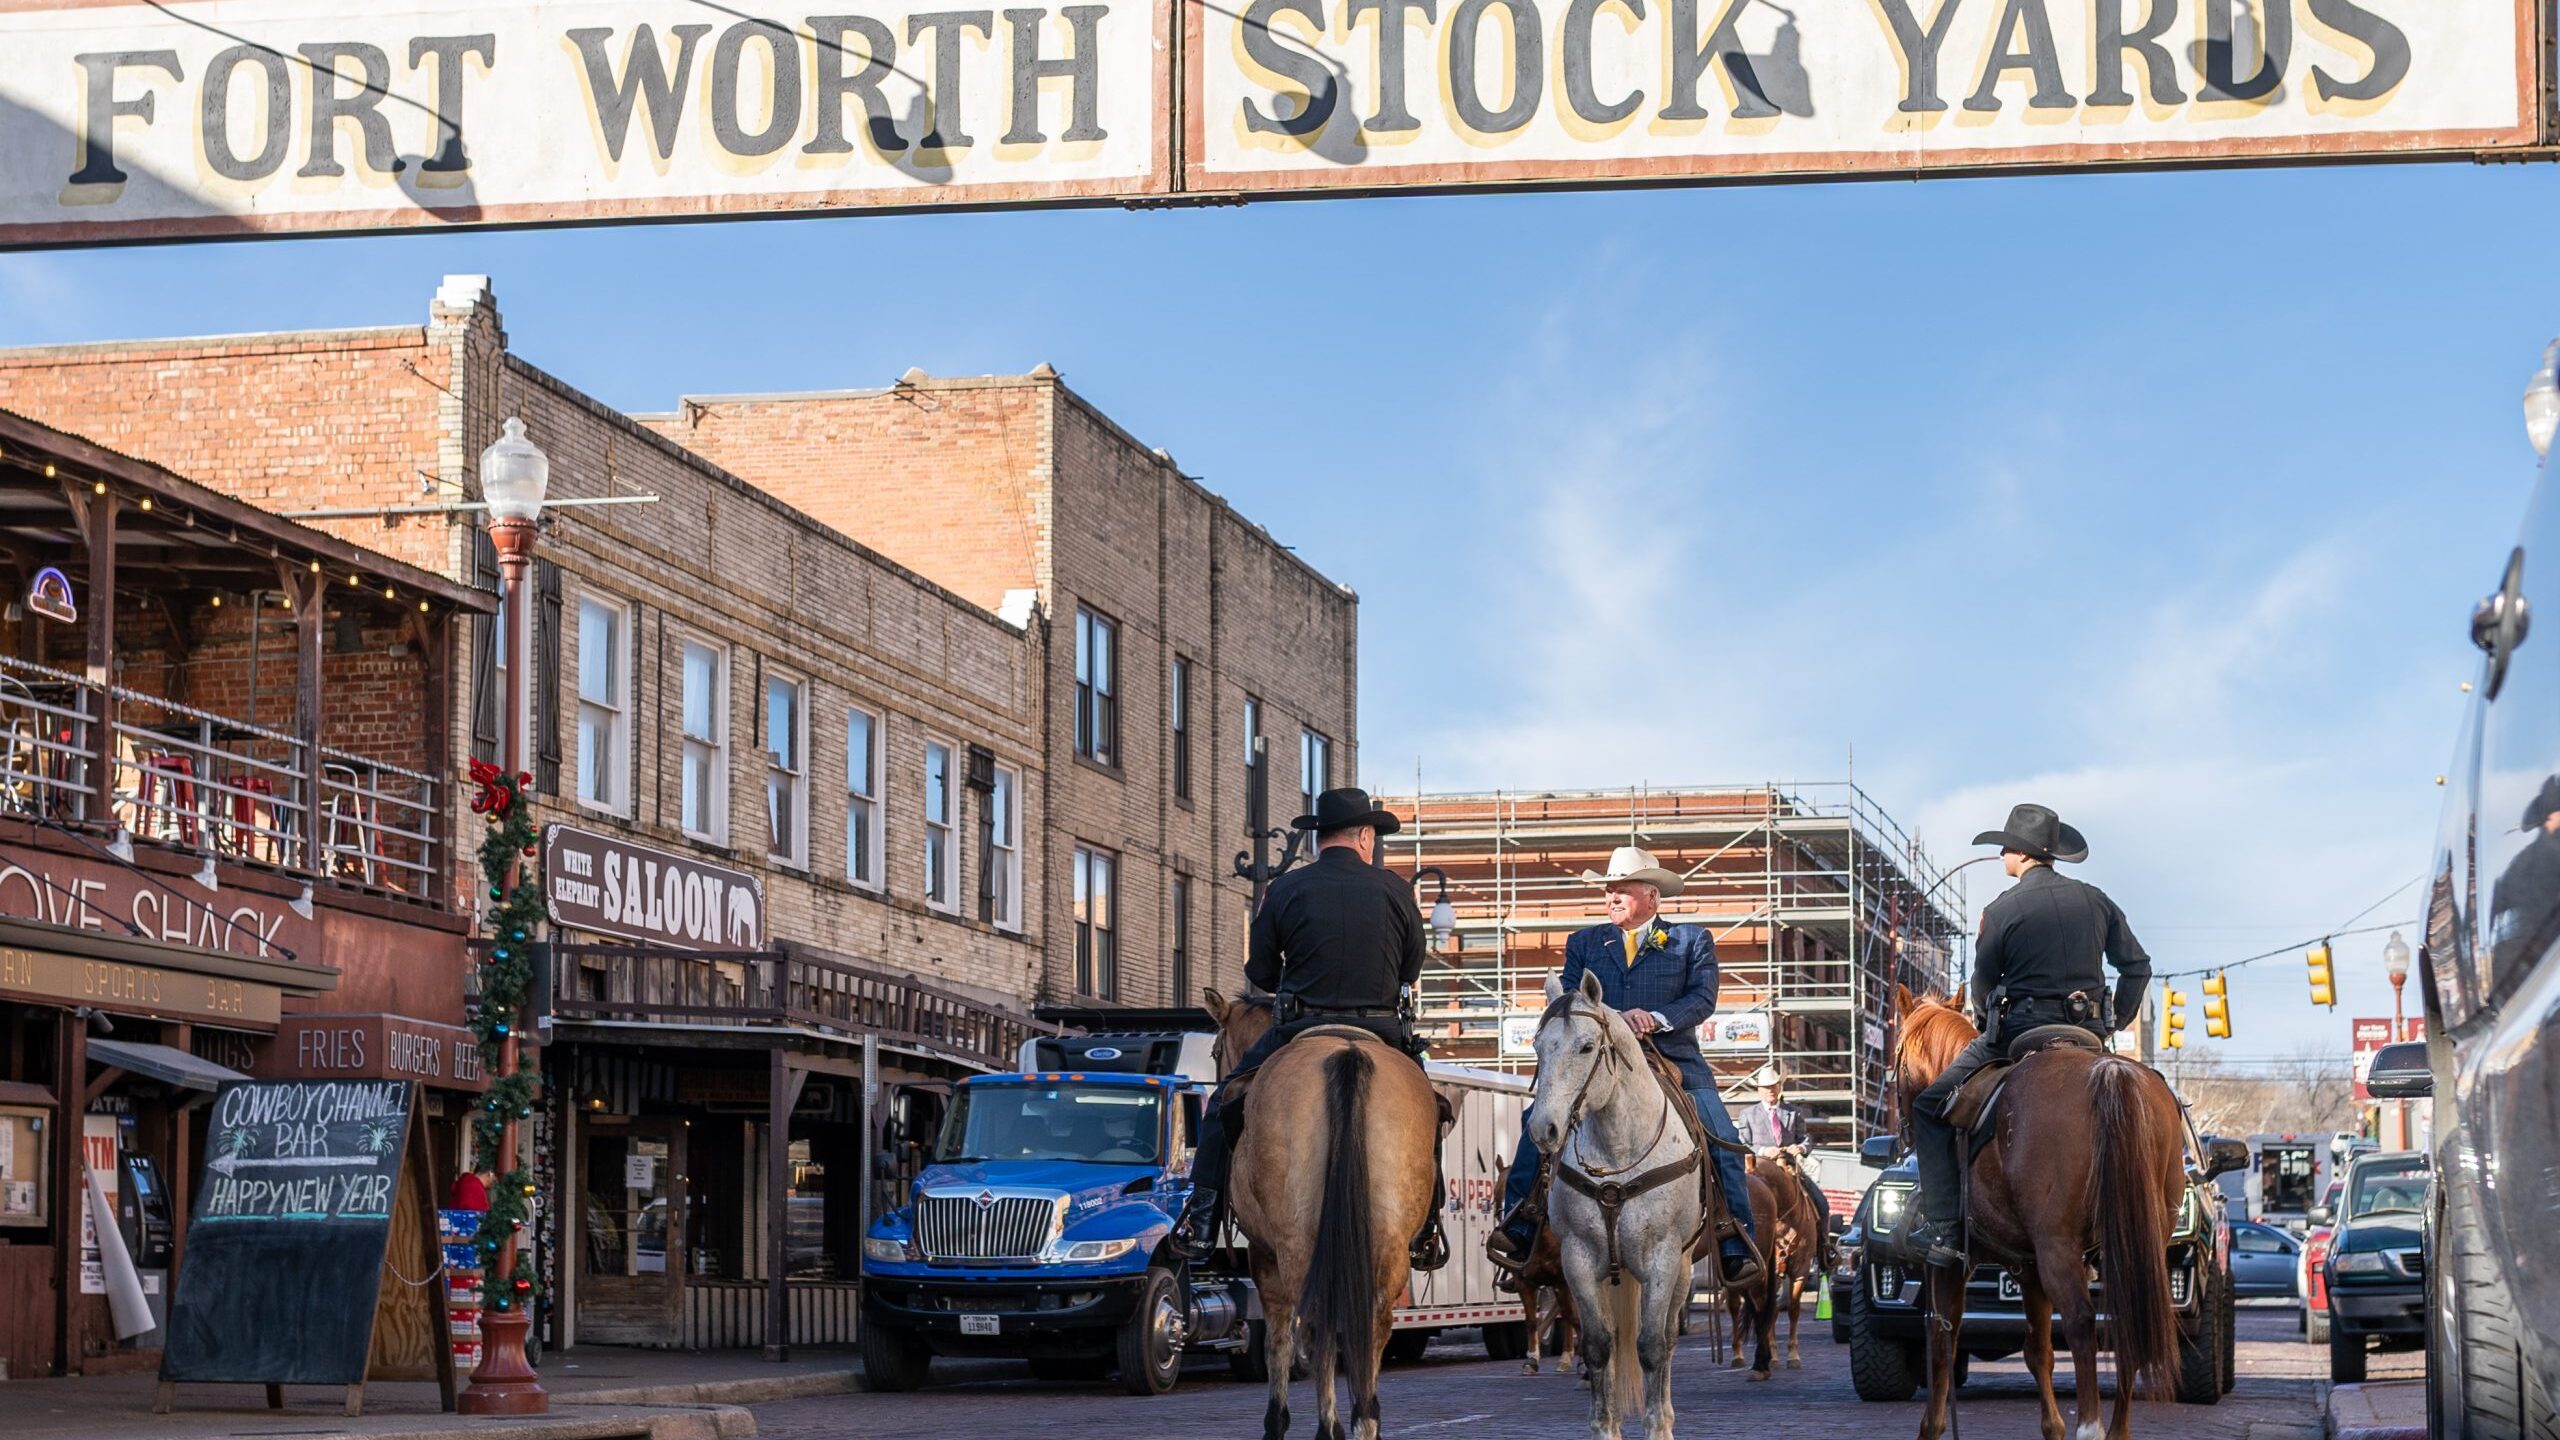 Fort Worth Stockyards: Weekend Getaways in Fort Worth